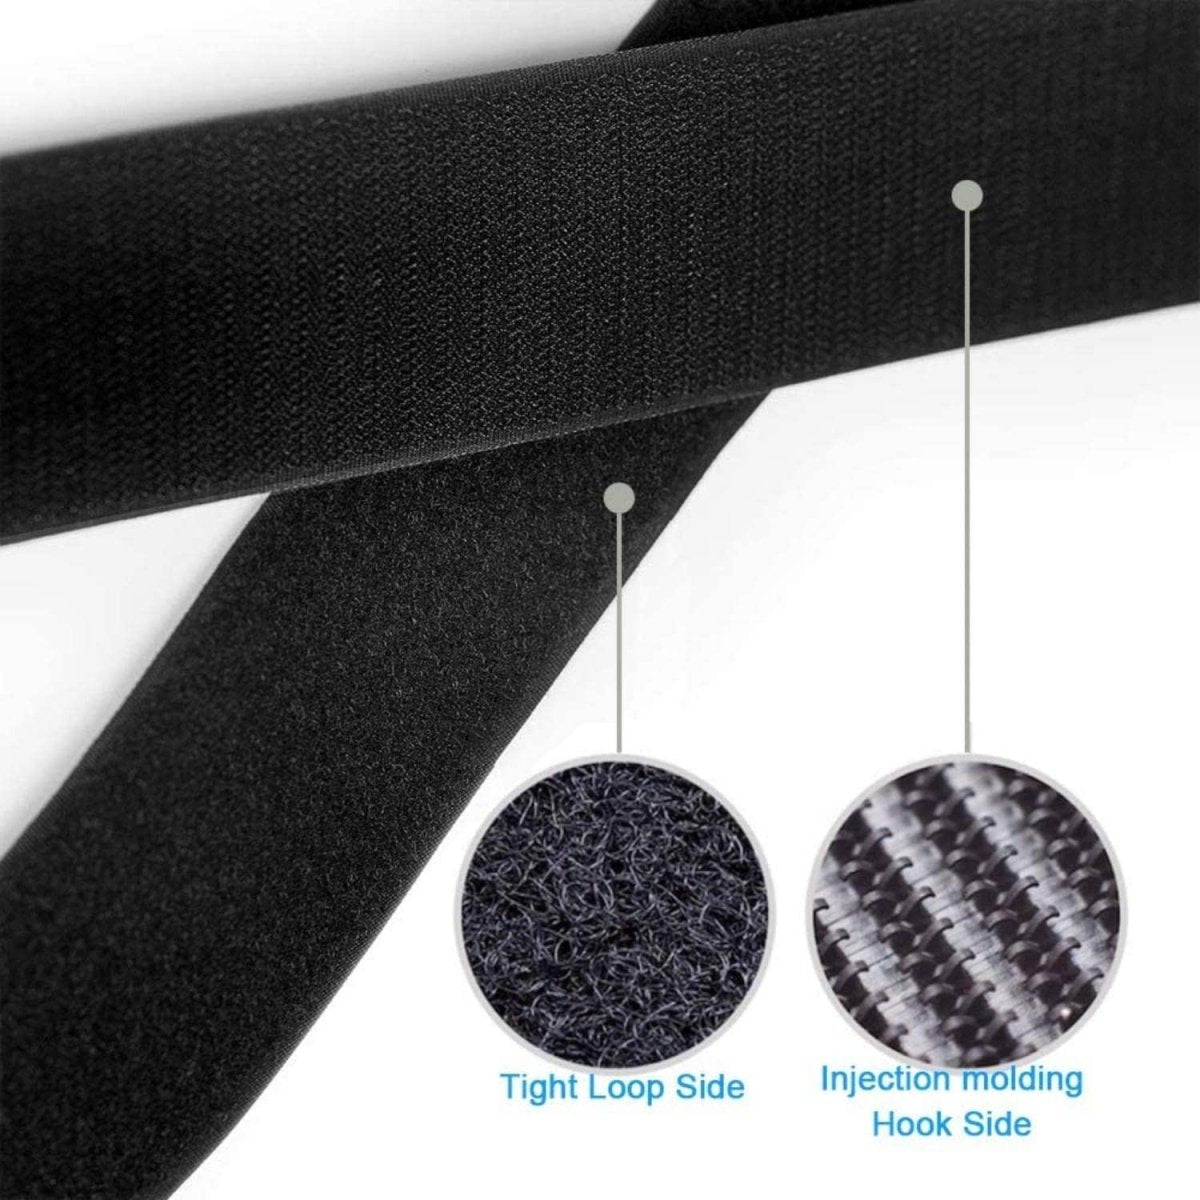 Hook and Loop Sew On Tape |No Glue on Back Side (25m x 25mm) ADHESIVE TAPES- #Royalkart#adhesive hook and loop tape